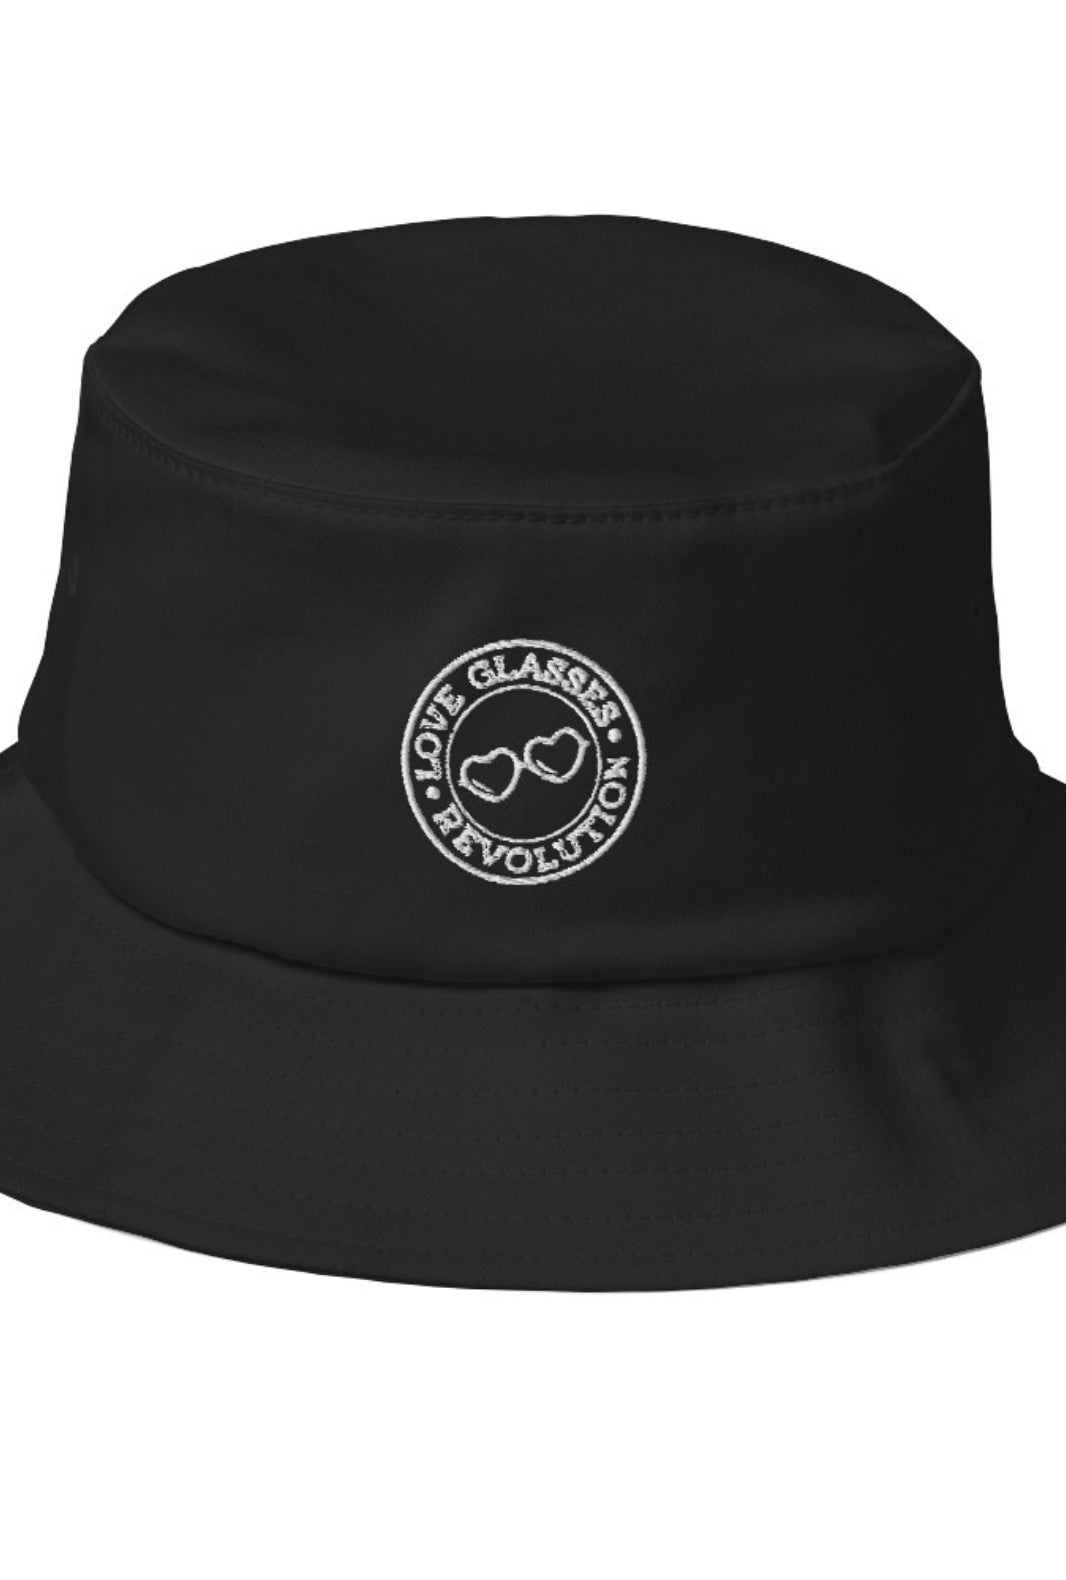 Old School Bucket Hat Love Glasses Revolution Style - Love Glasses Revolution